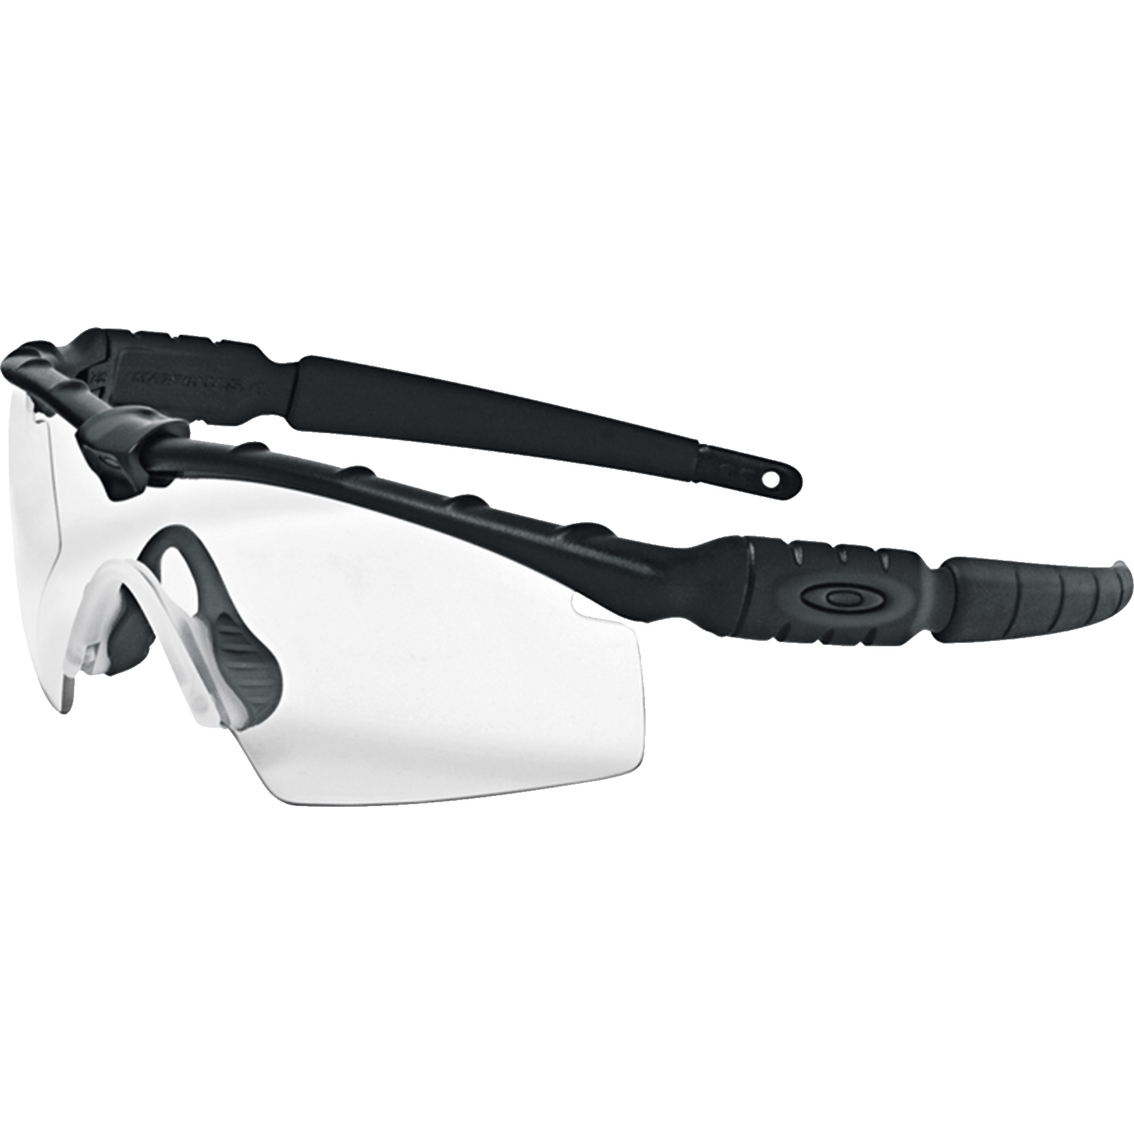 Oakley Matte Black Clear Sunglasses 11-138 - Image 2 of 2